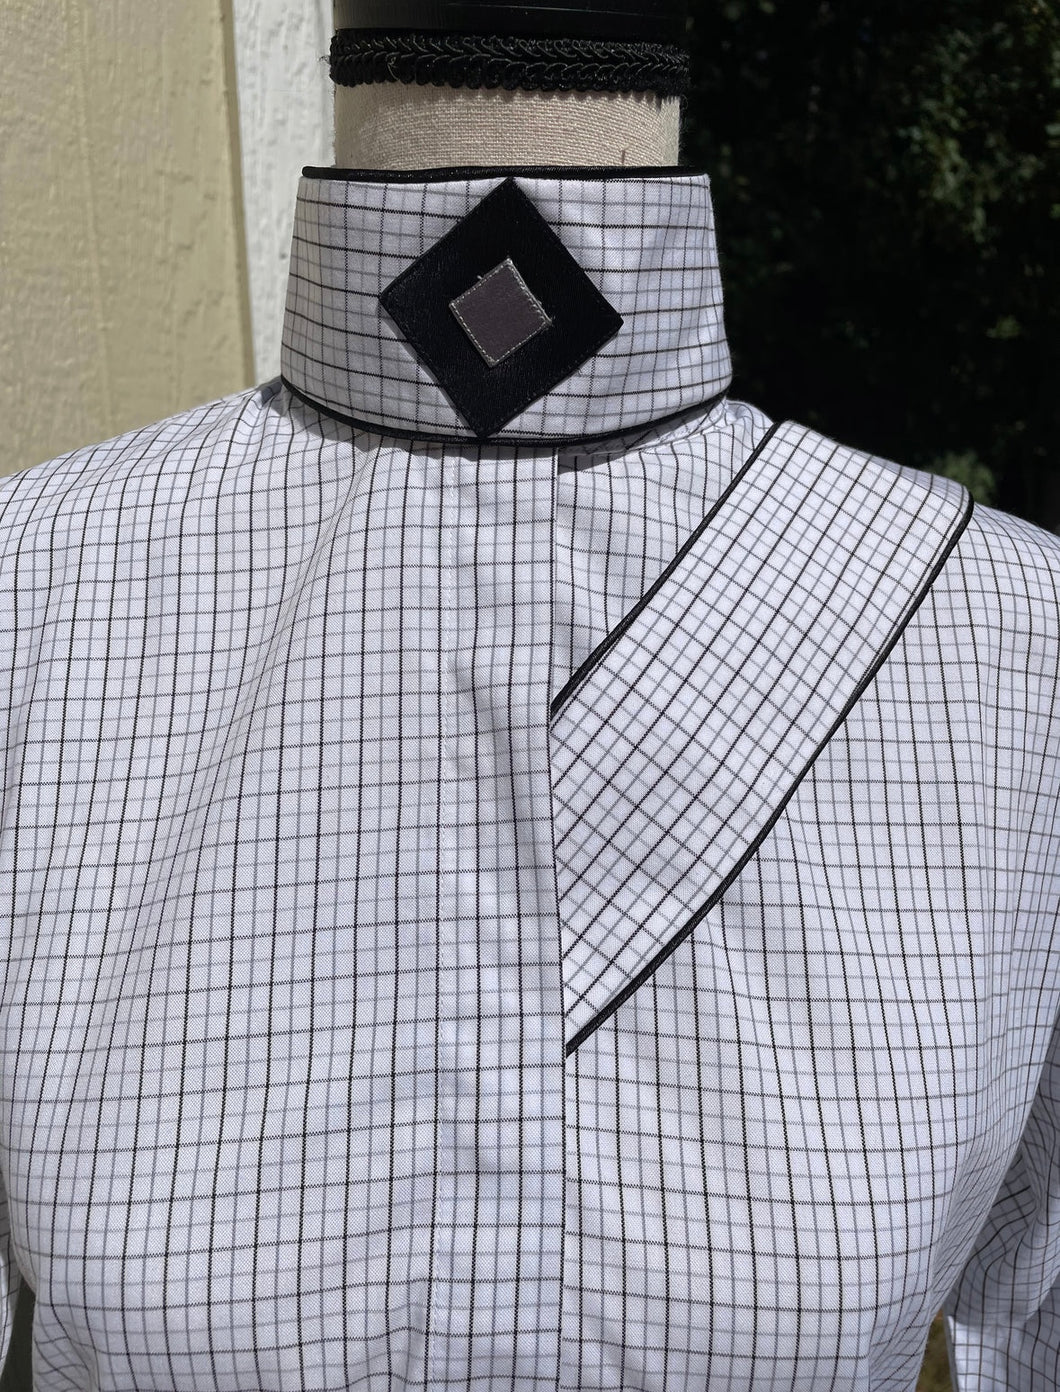 White, Black & Gray Check Print: 2 Collars - Size 32